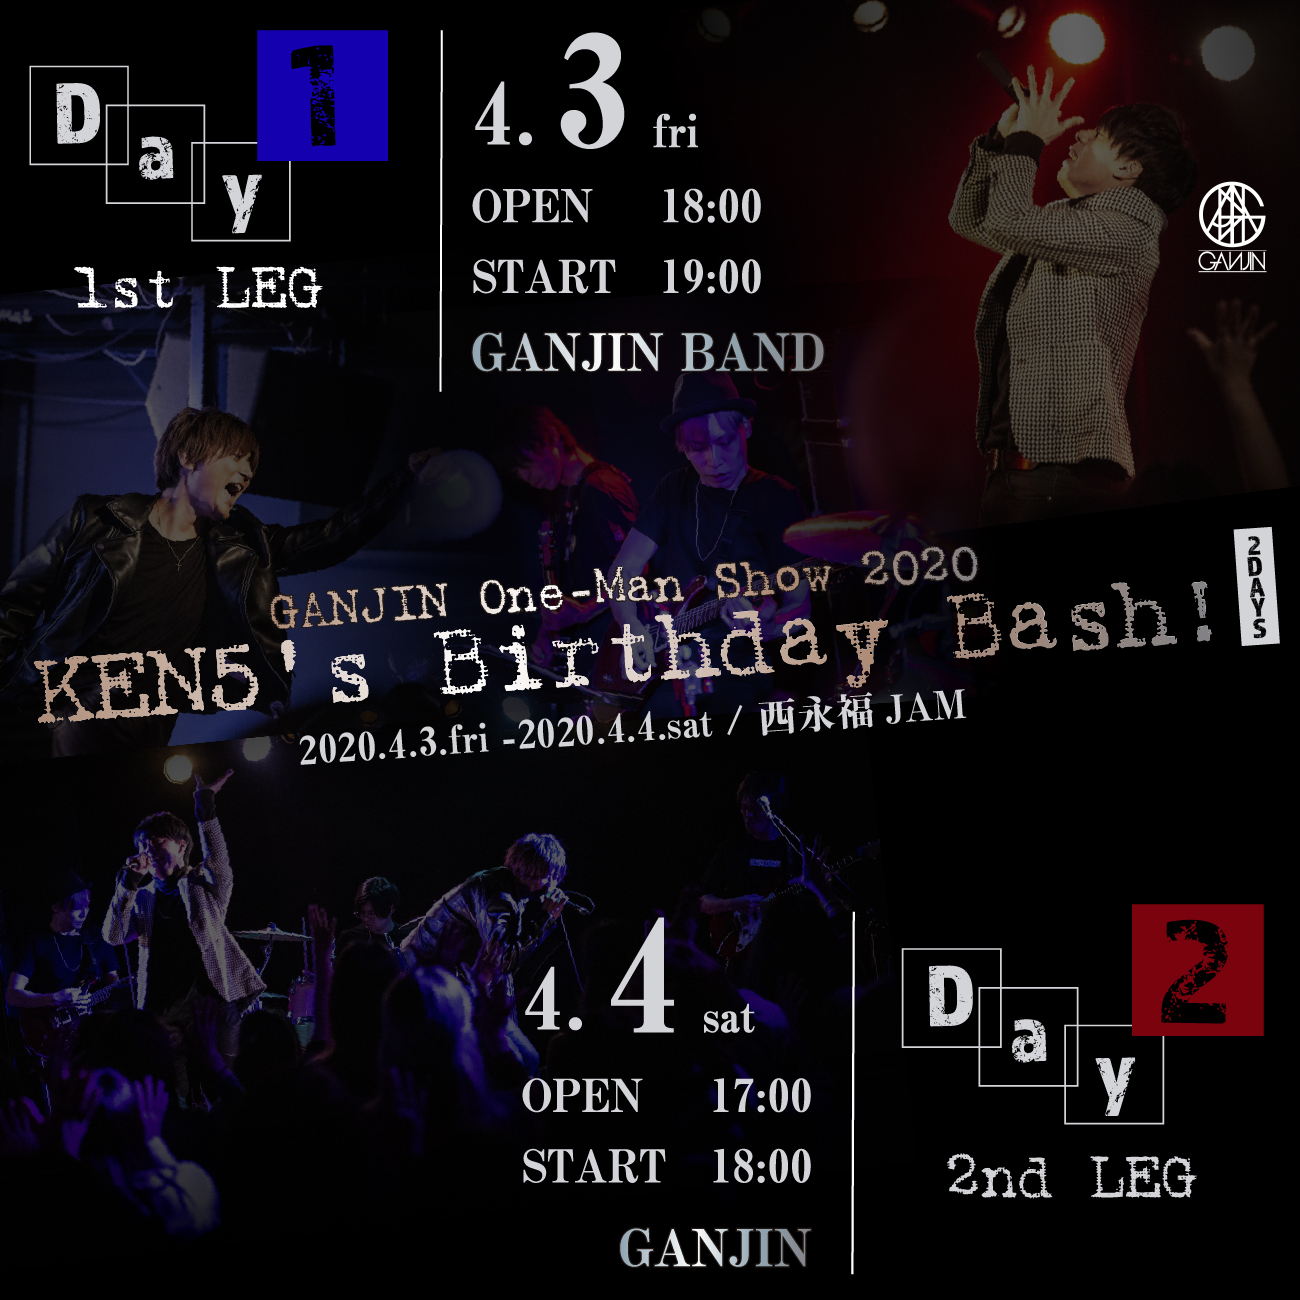 GANJIN One-Man Show 2020 KEN5's Birthday Bash!!